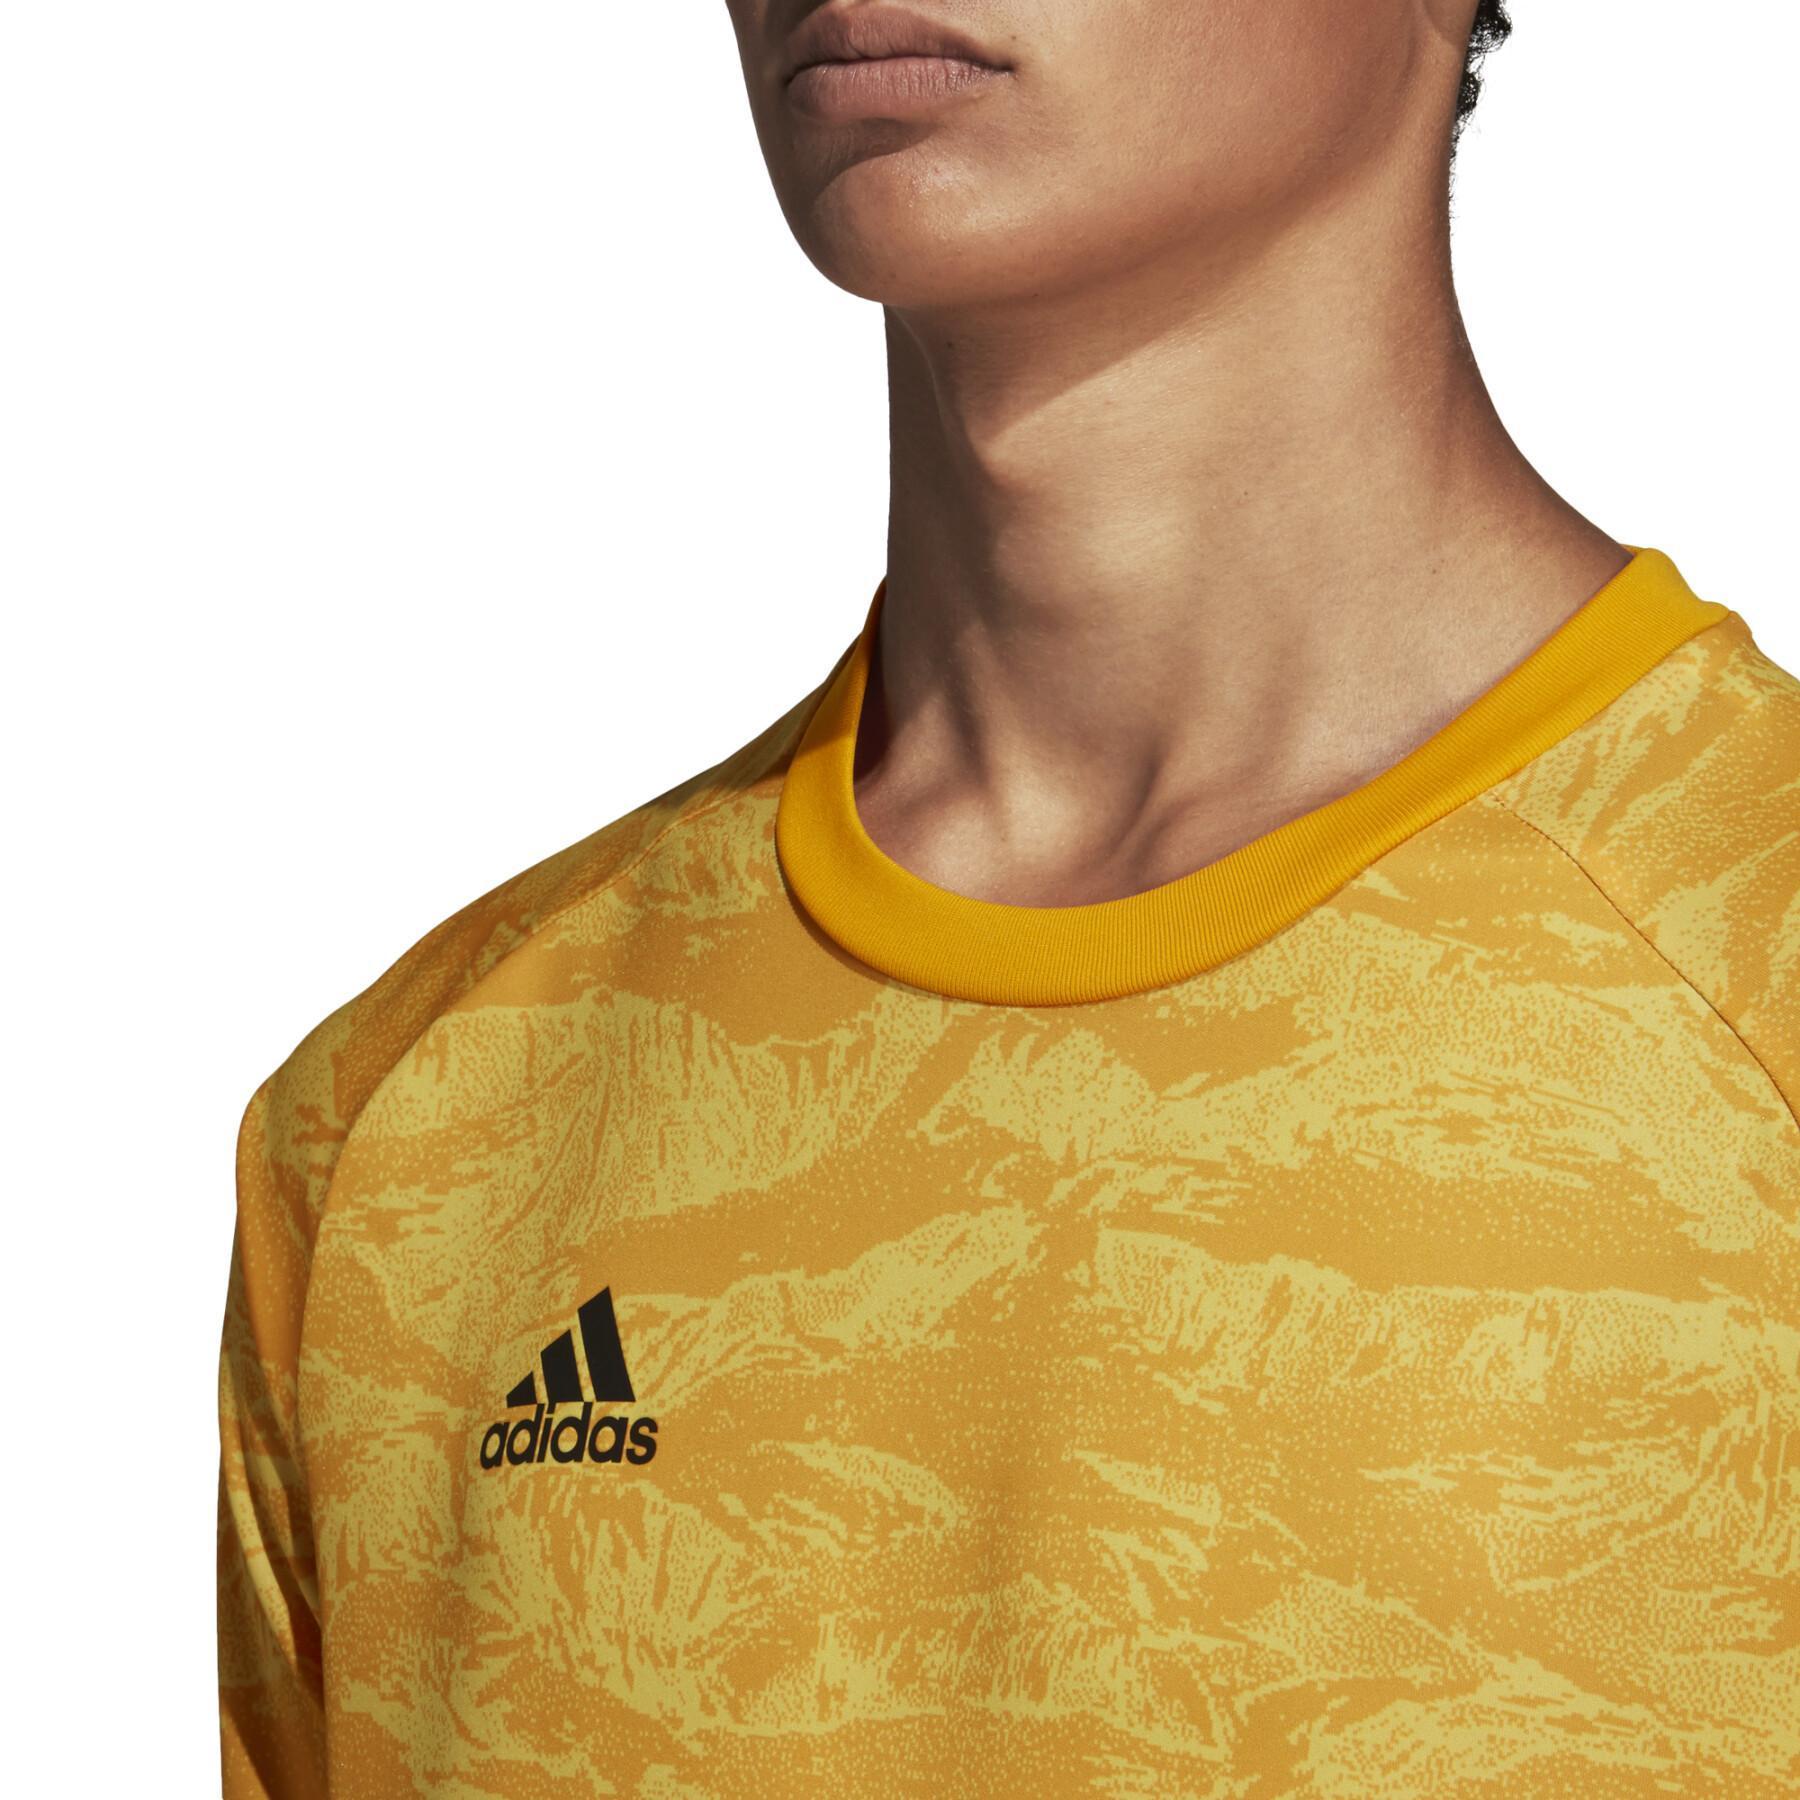 Goalkeeper jersey adidas AdiPro 18